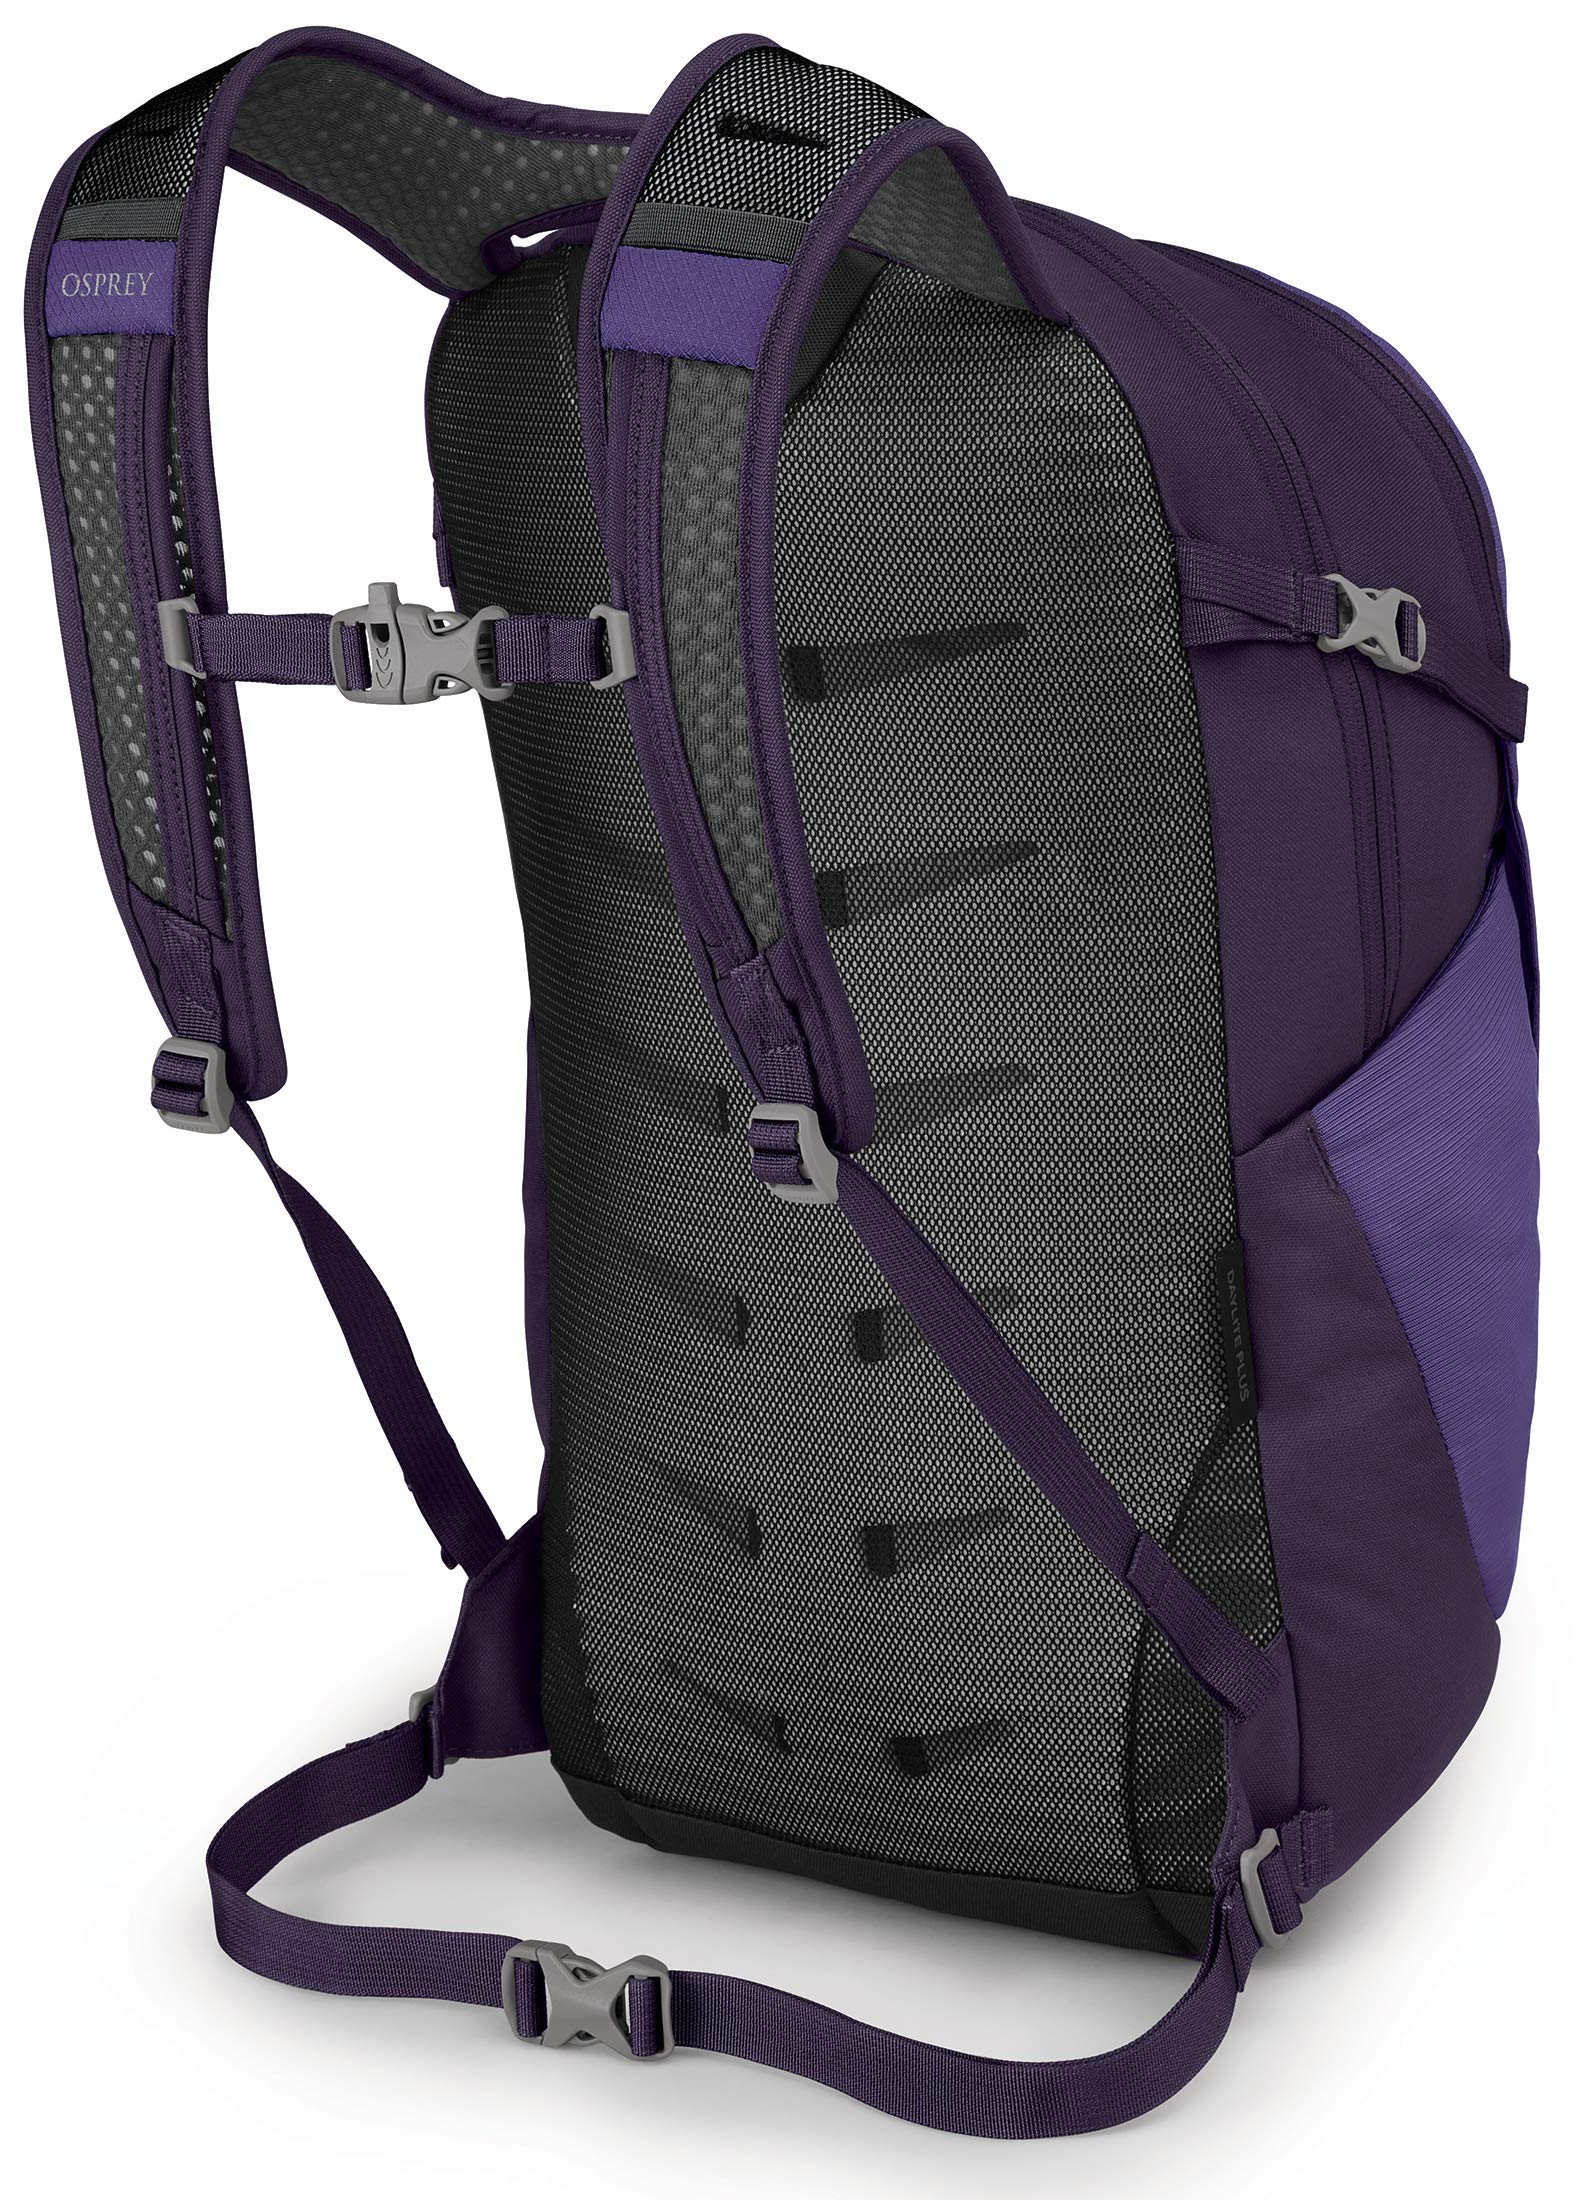 Osprey Daylite Plus Daypack, Dream Purple, One Size